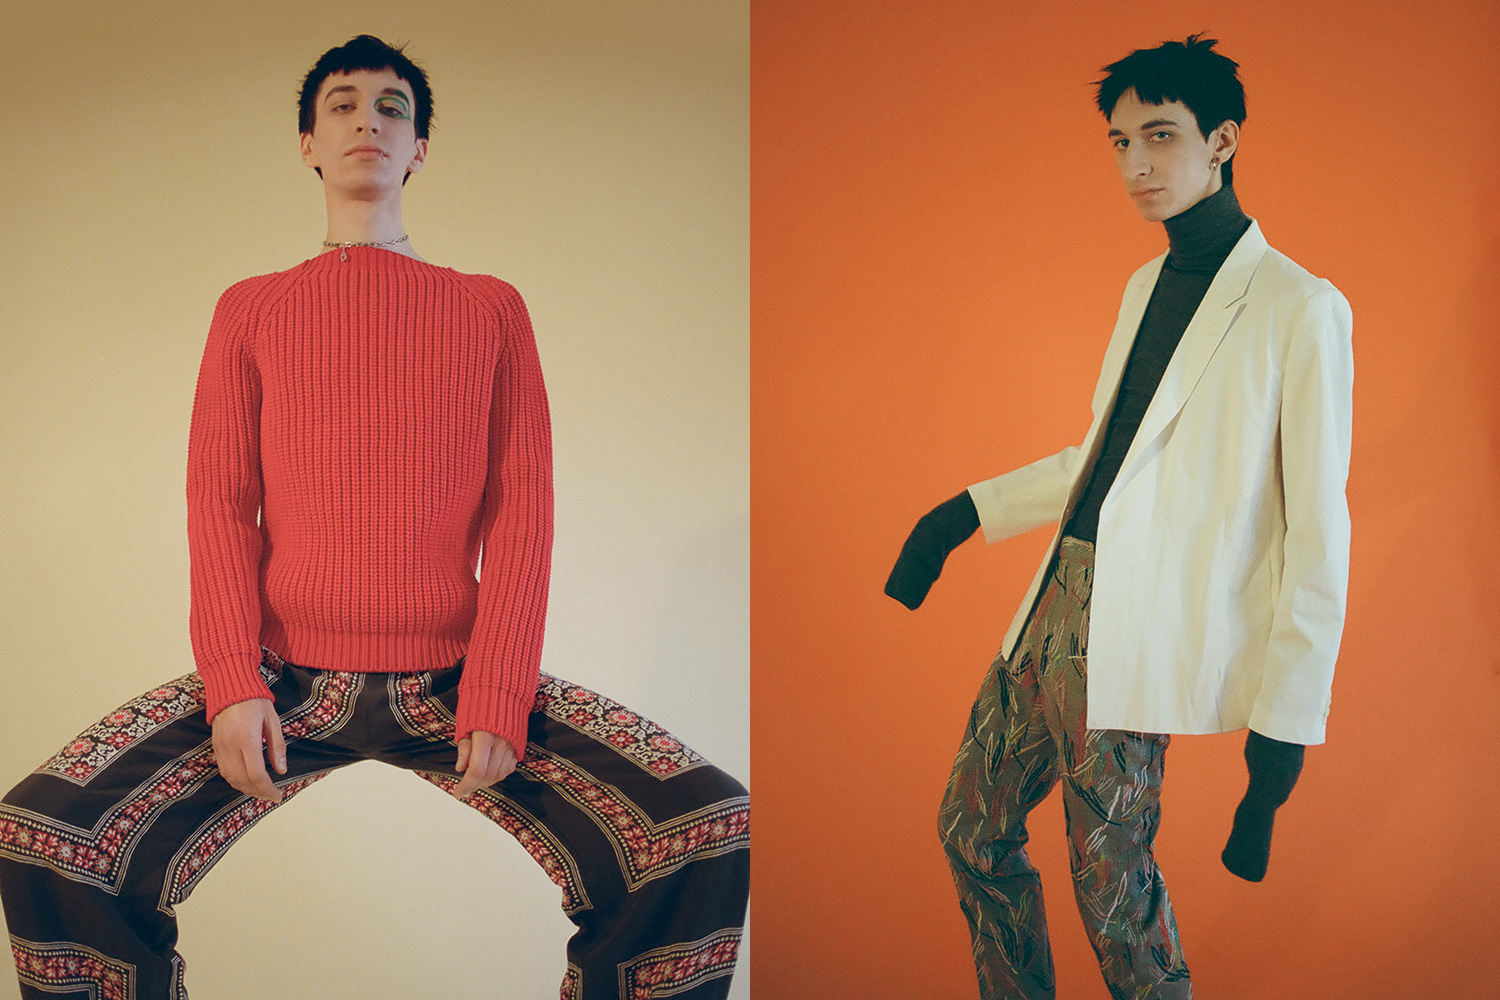 Слева: свитер Gucci, 45800 р., 
брюки Zara, 1999 р. Справа: пиджак H&M, 3999 р., 
водолазка Uniqlo, 999 р., 
брюки Dior, 59800 р.

